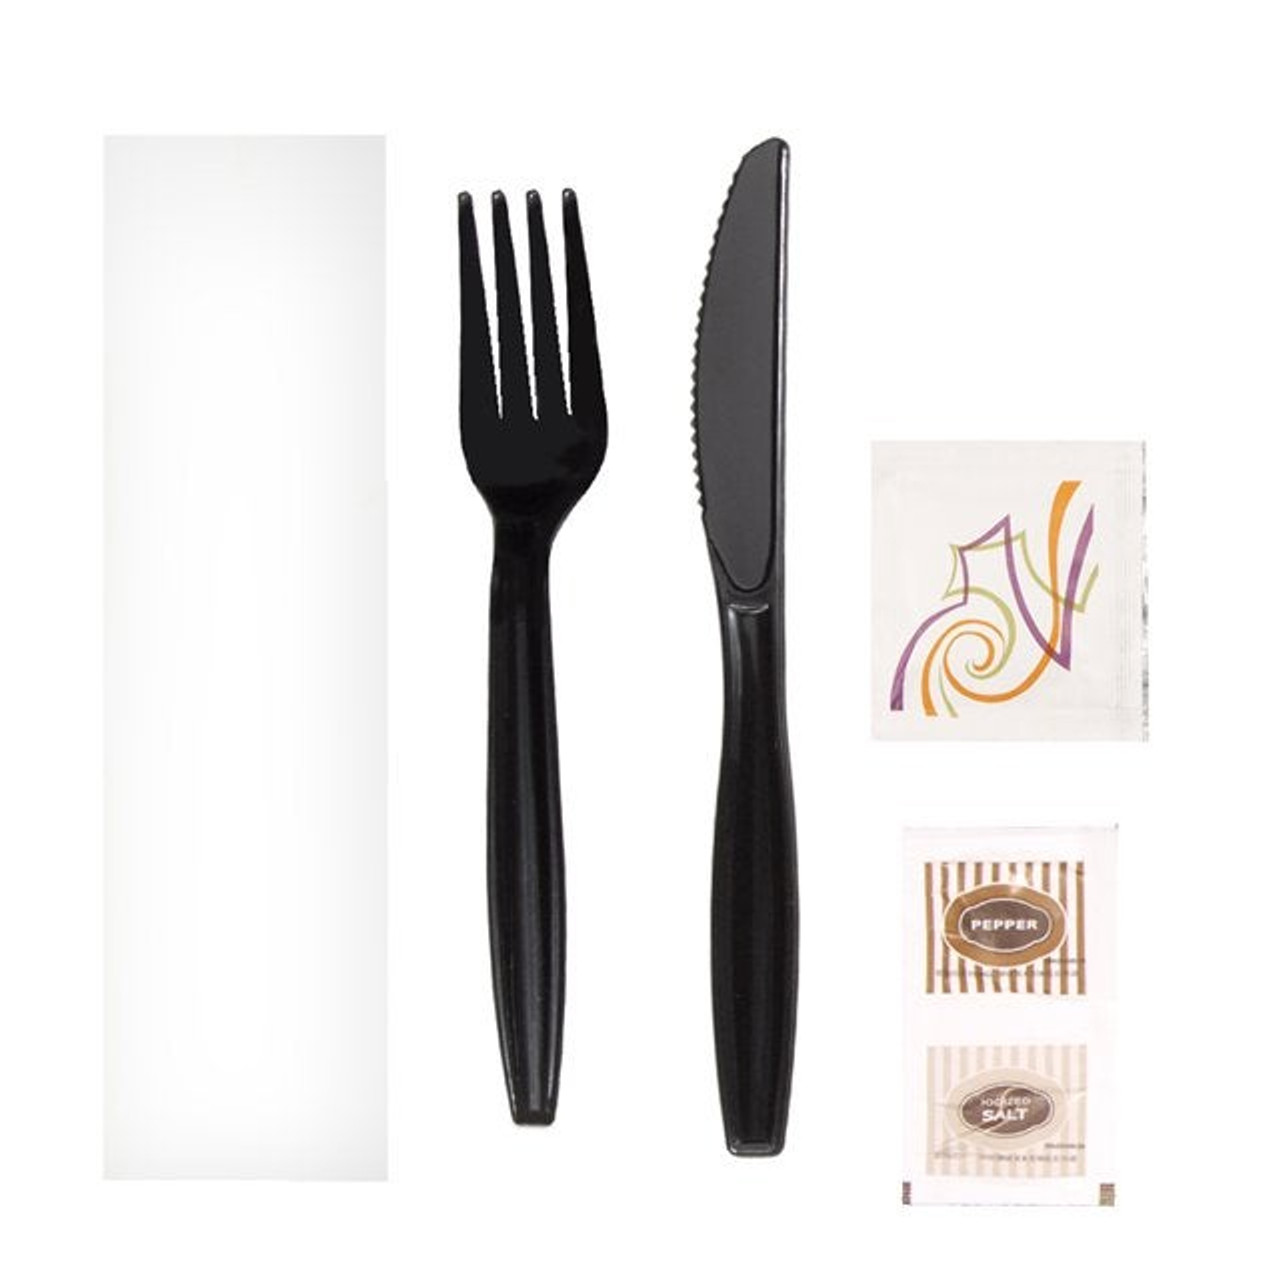 Gordon Choice Black Plastic Cutlery Kits, 6 Piece, Fork, Knife, Napkin, Wn, Salt, Pepper | 250UN/Unit, 1 Unit/Case